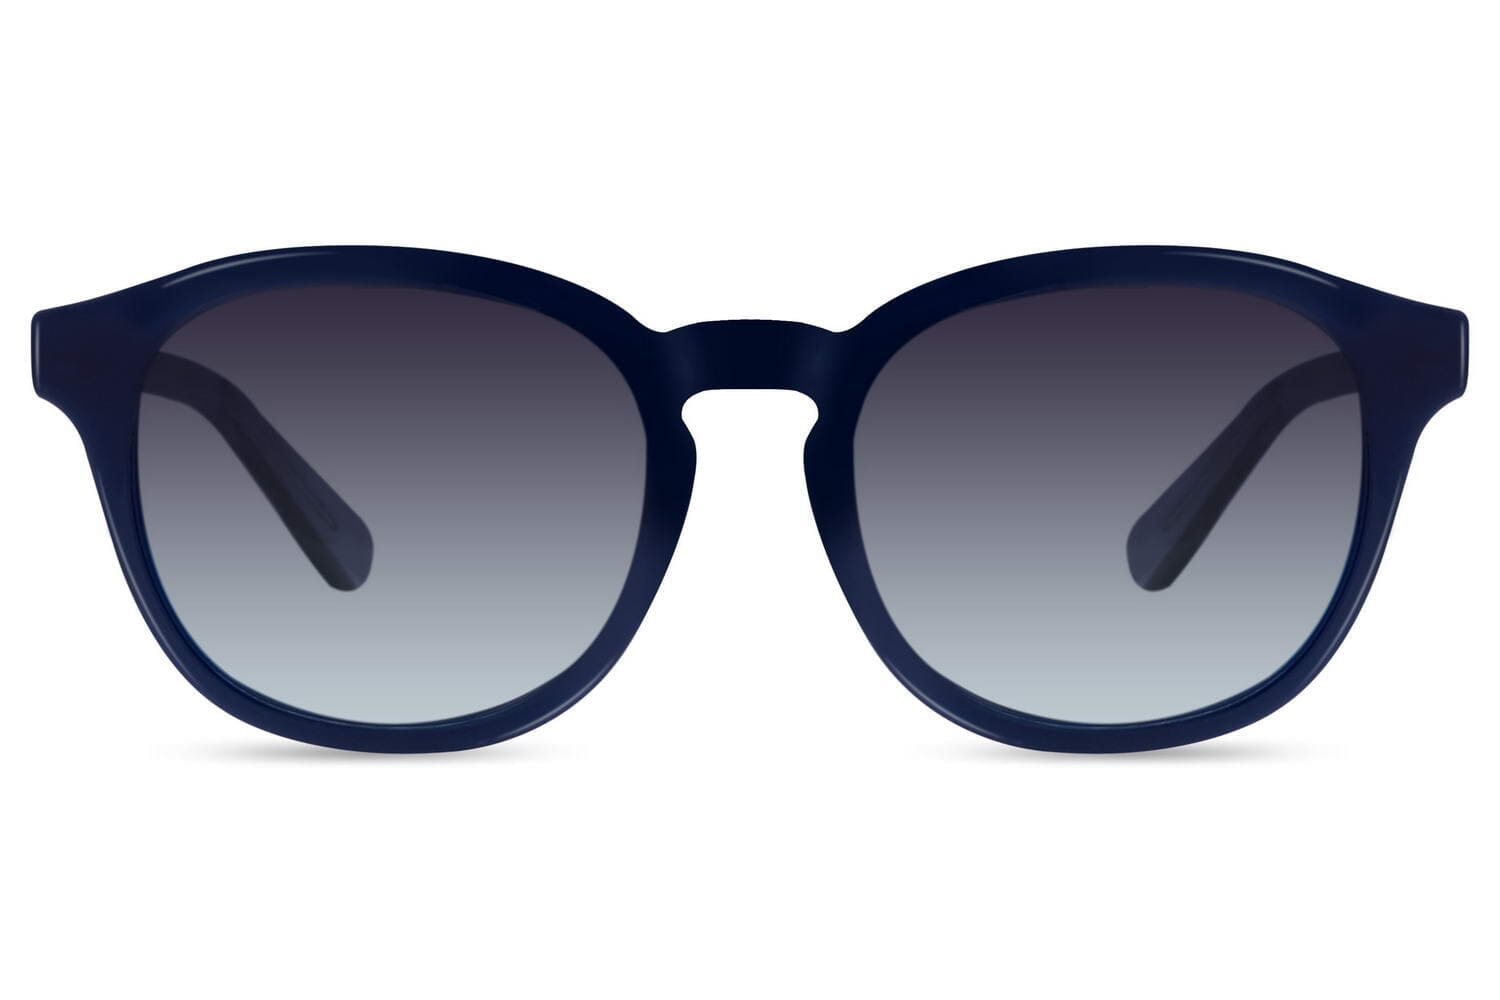 Round balck sunglasses. Front view. Keyhole nose bridge sunglasses.